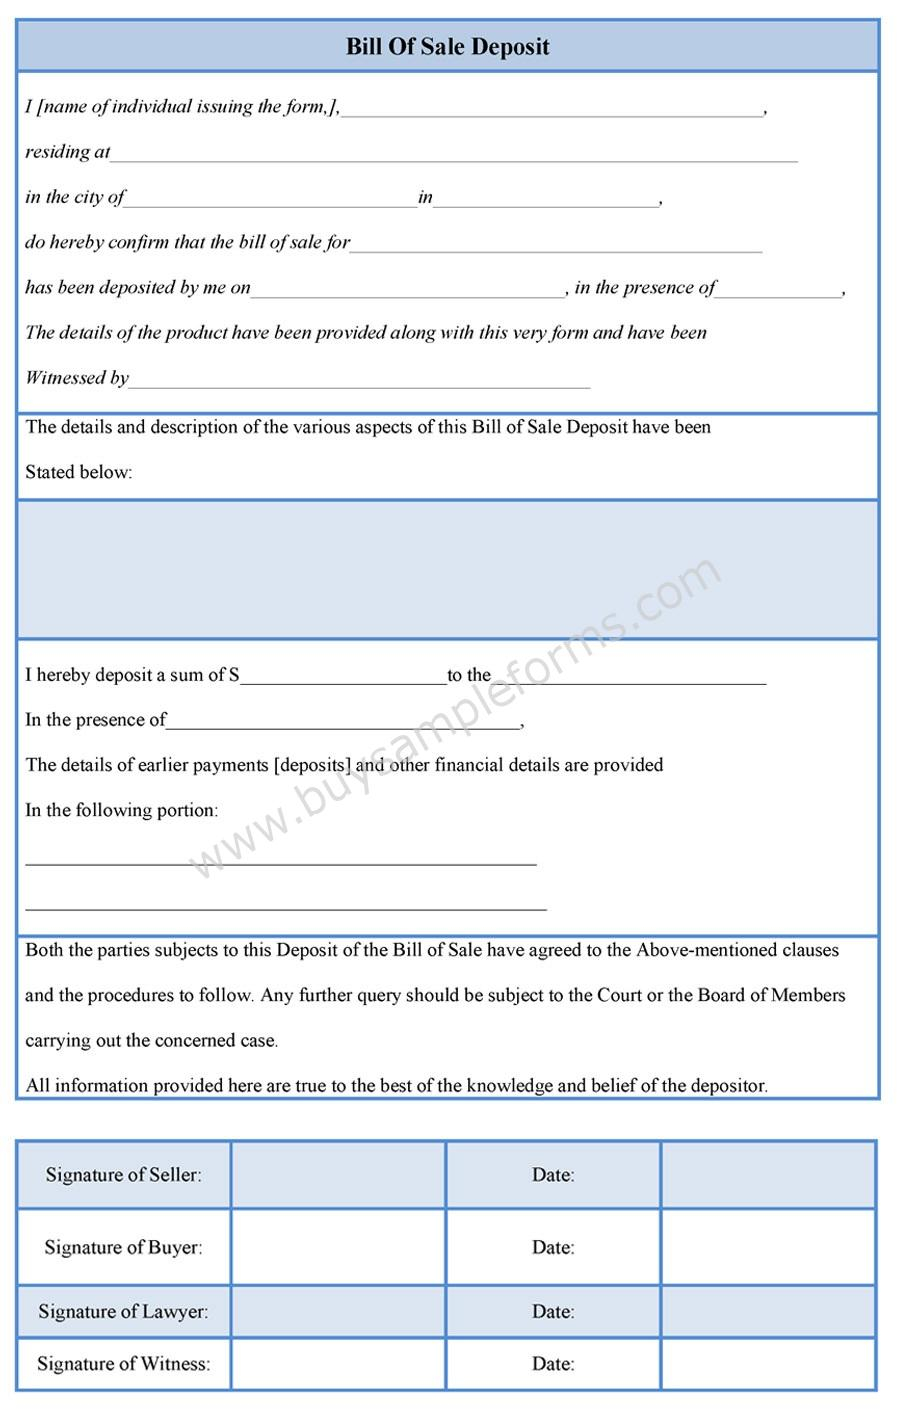 Bill of Sale Deposit Form - Sample Forms For Deposit Form For Bill Of Sale With Regard To Deposit Form For Bill Of Sale